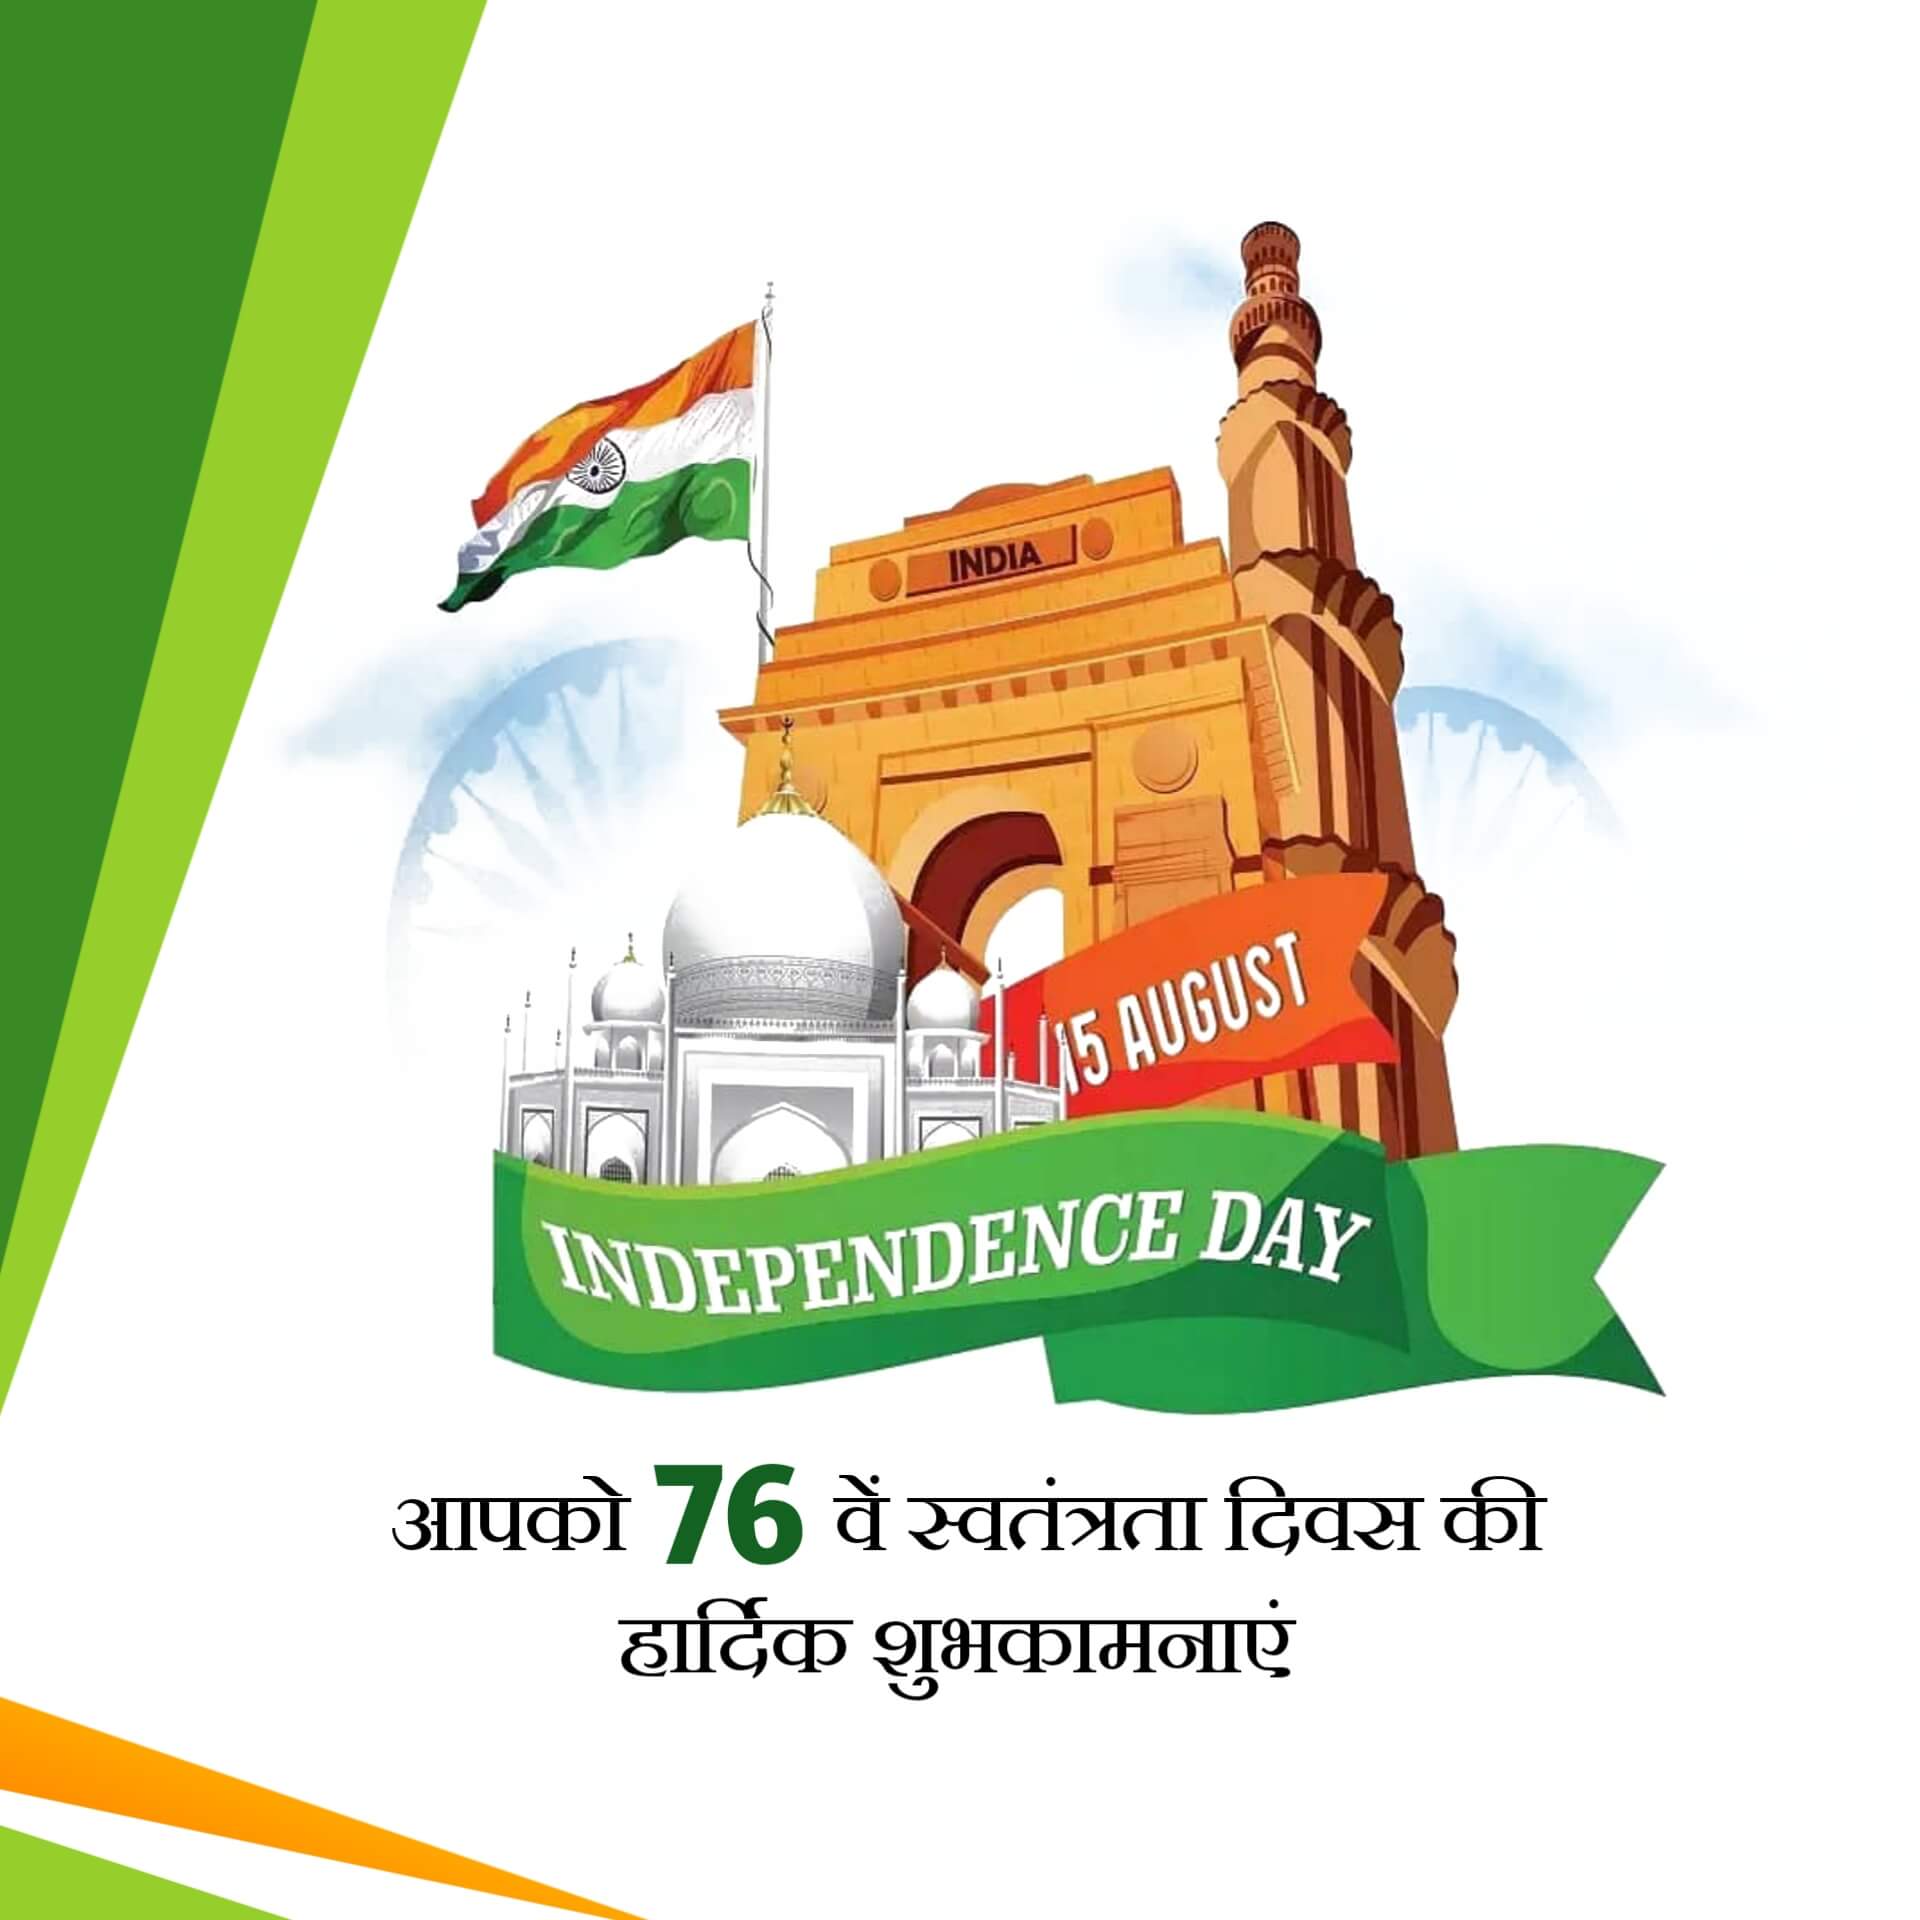 Hindi Independence Day Image